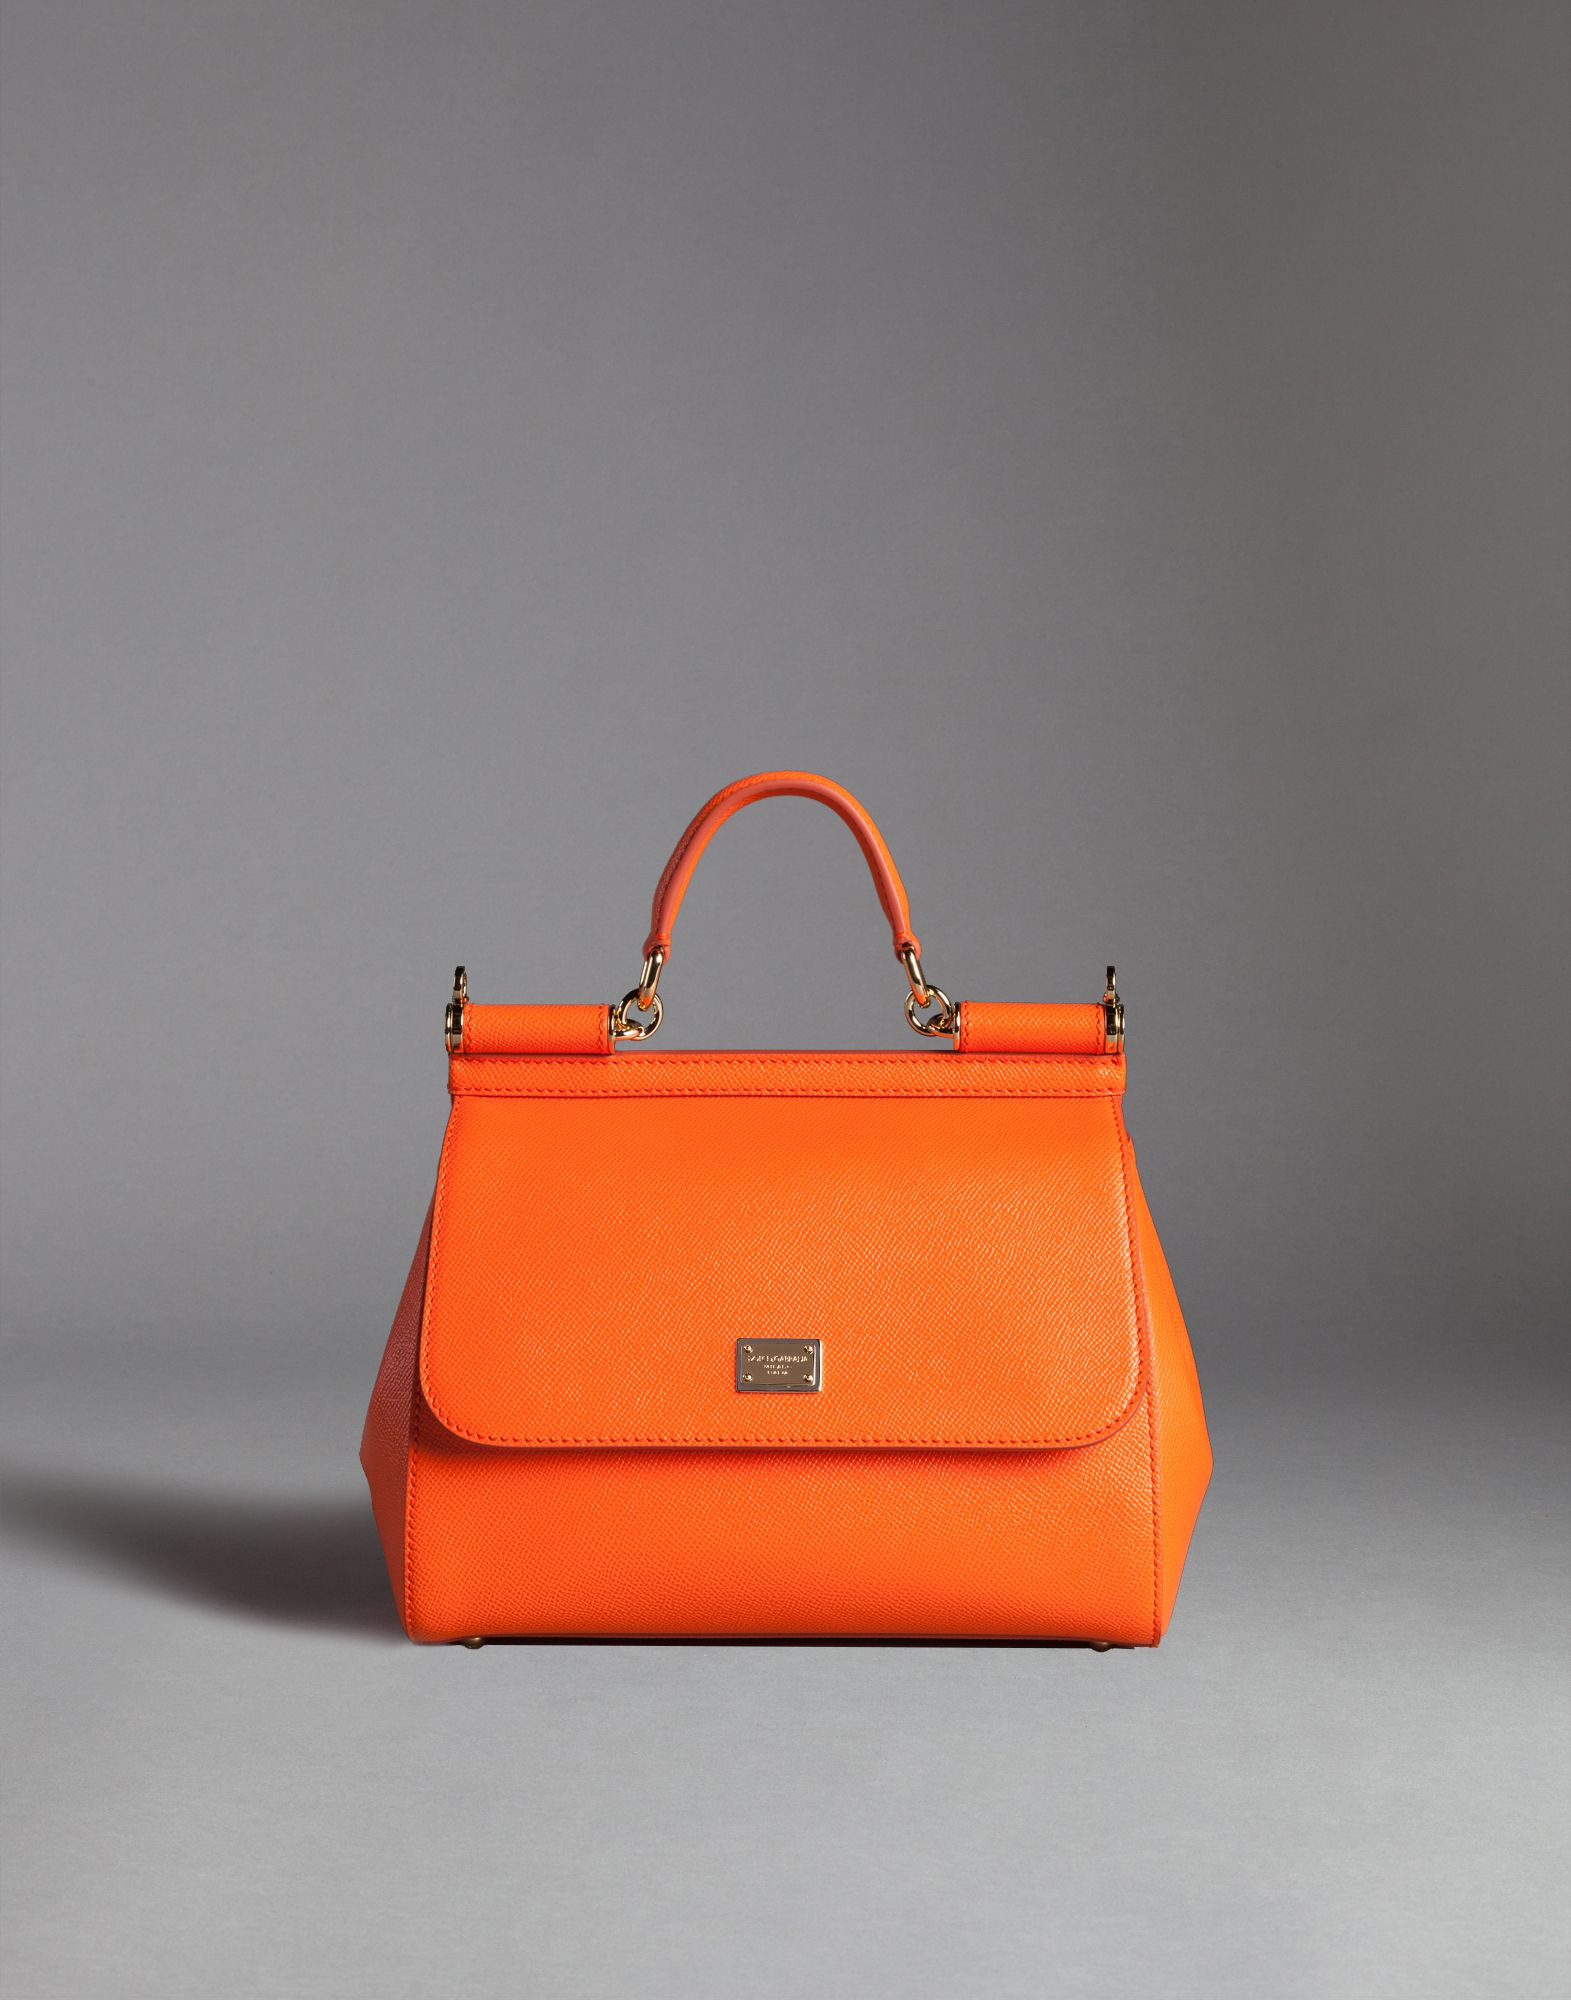 Dolce & Gabbana Medium Sicily Handbag In Dauphine Leather in Orange - Lyst